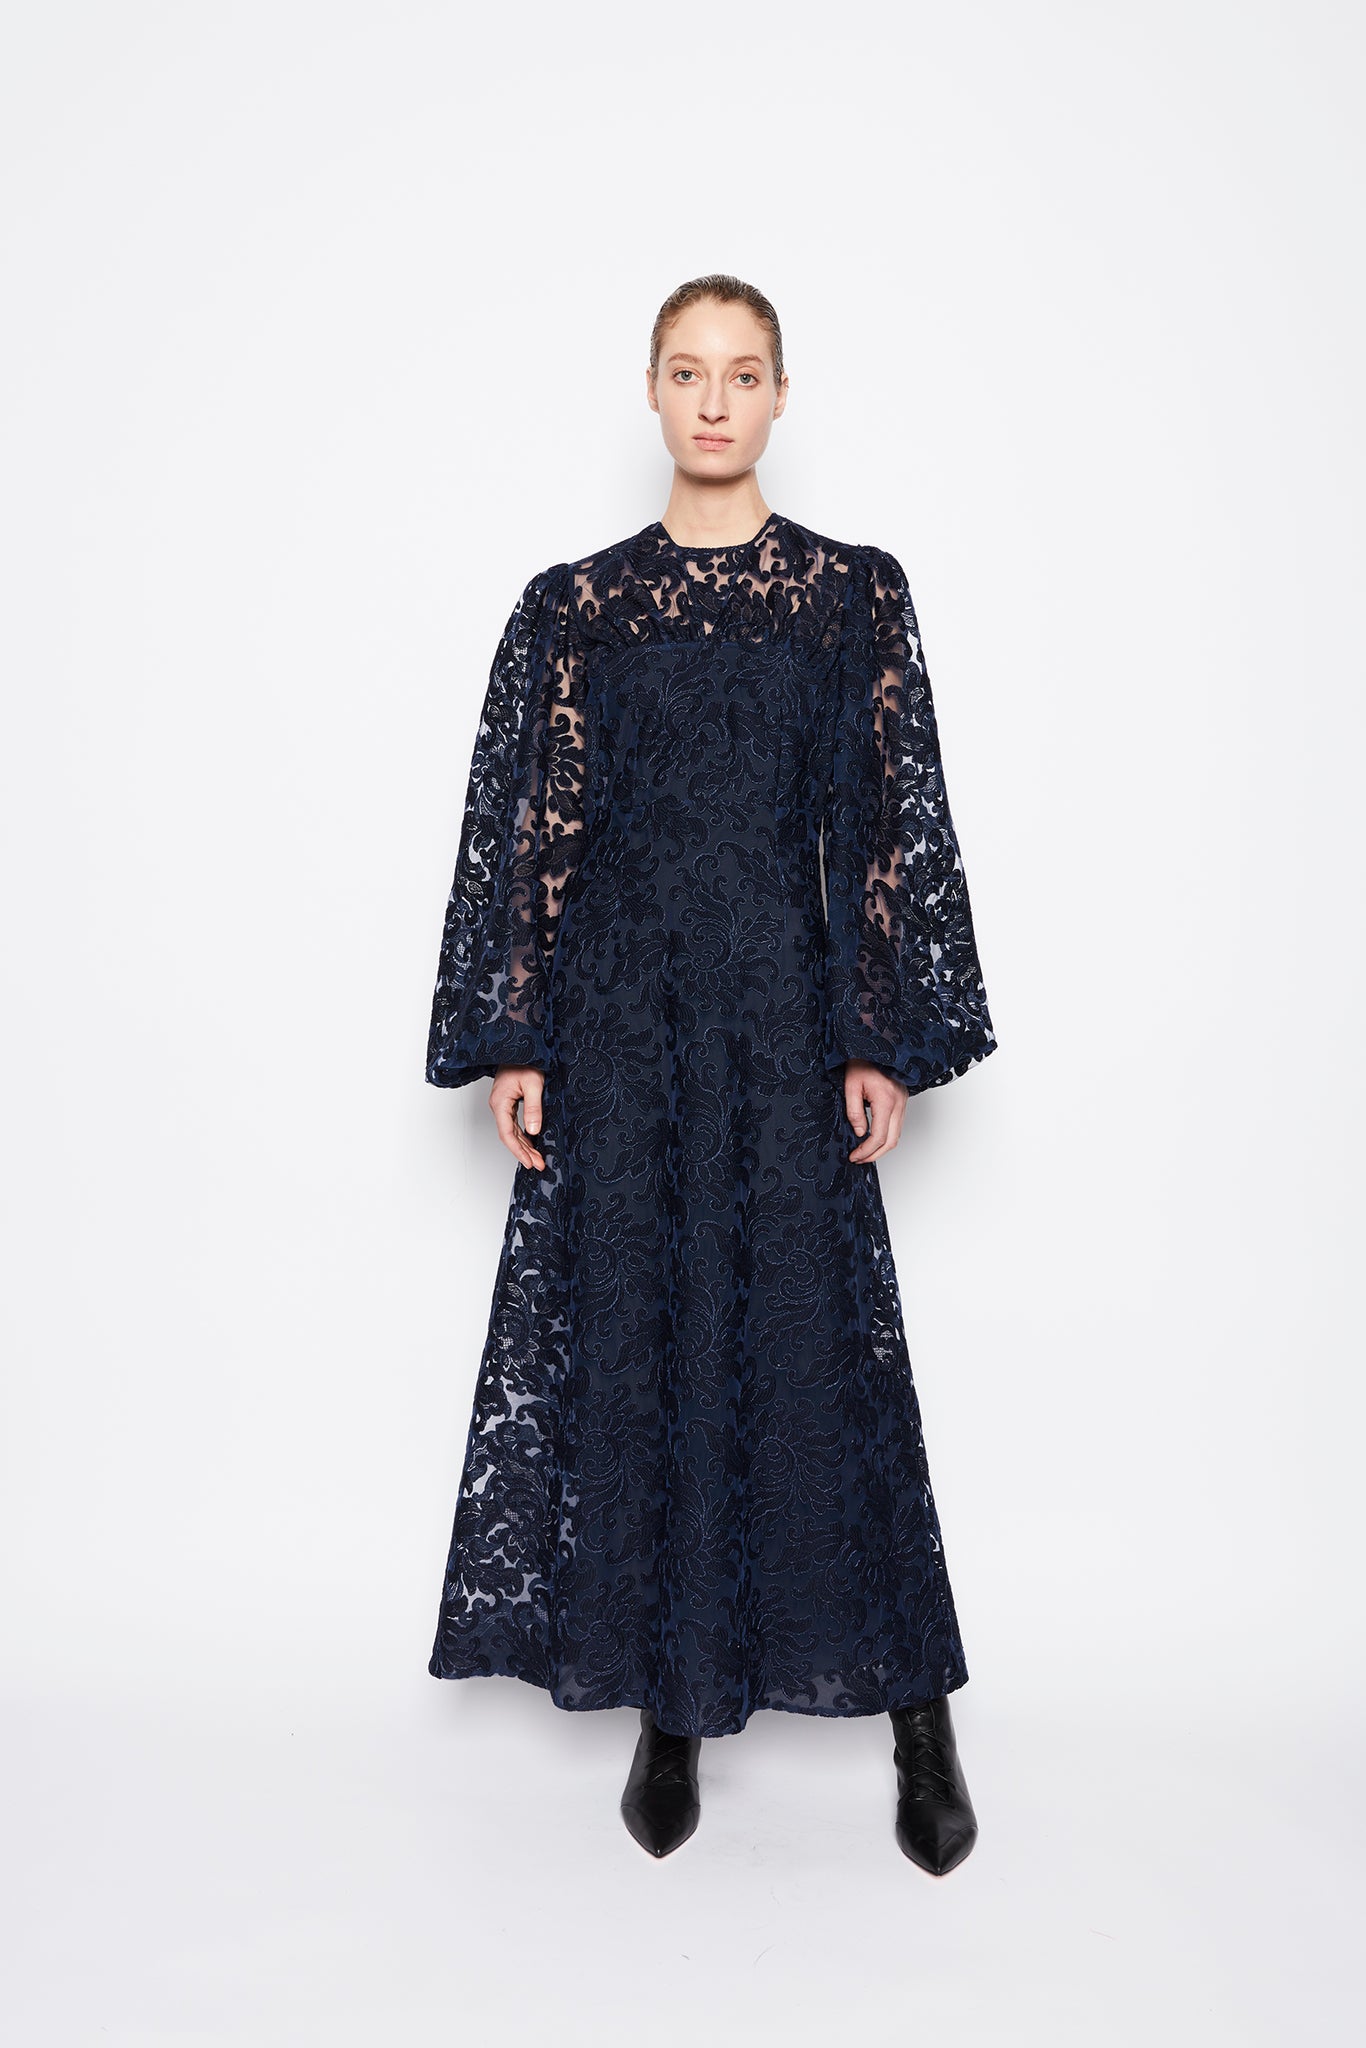 Carmelita Dress | Navy Blue Long Sleeve Lace Gown | Emilia Wickstead